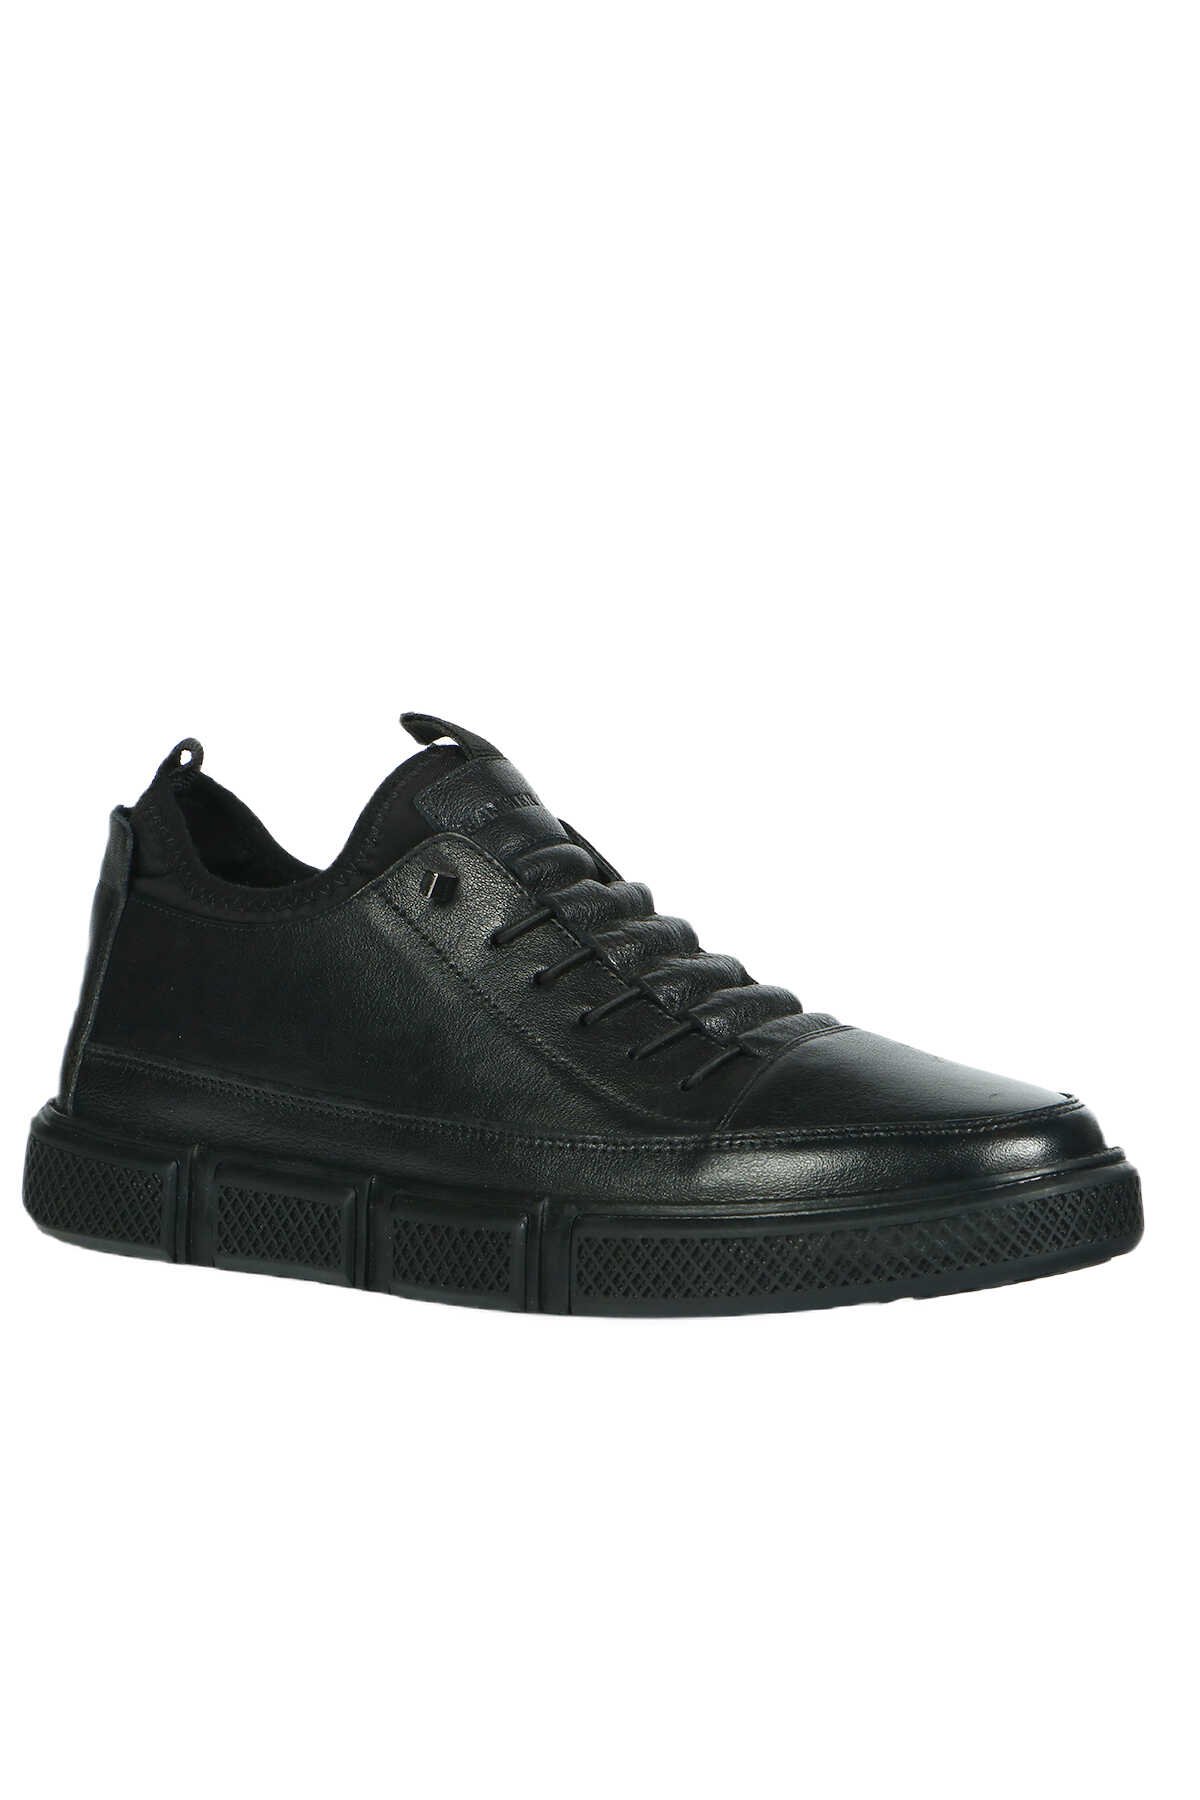 Hammer Jack - Hammer Jack MADRID Sneaker Erkek Ayakkabı Siyah Nıce